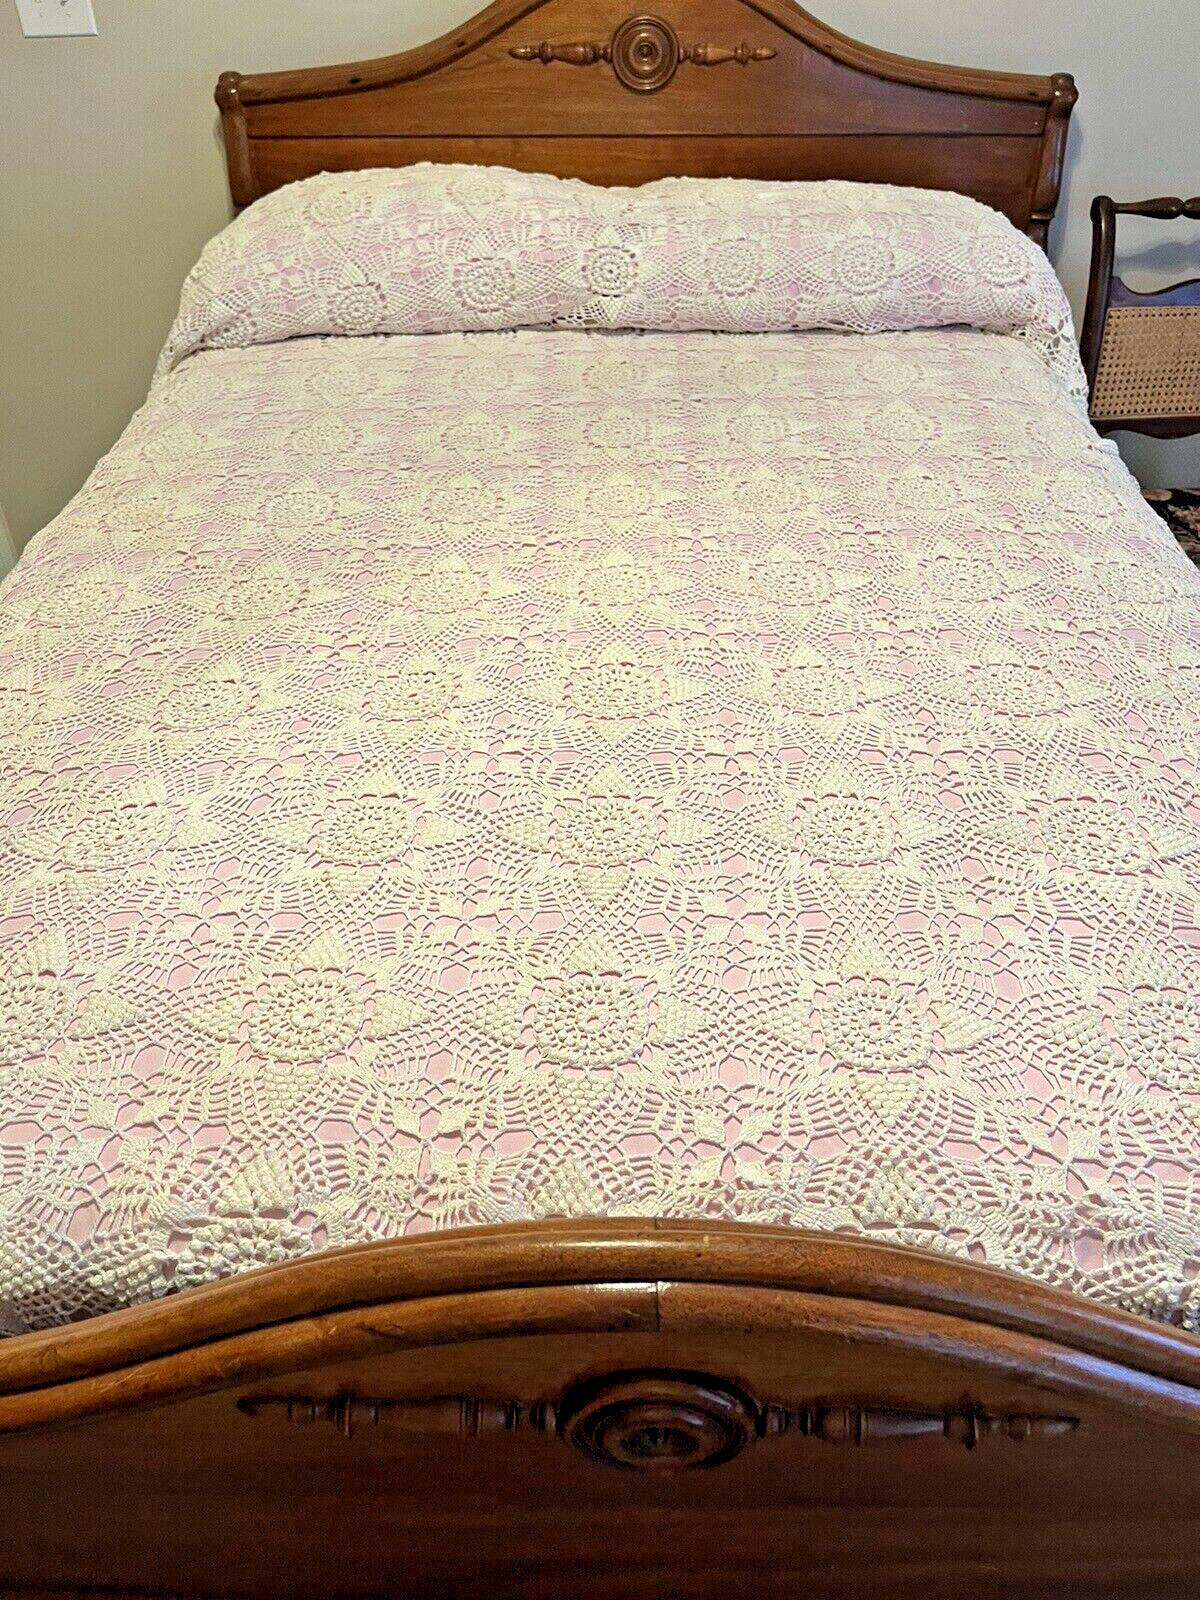 Antique Handmade VTG 50’s Style Crocheted Bed Spread Coverlet Star Floral Design